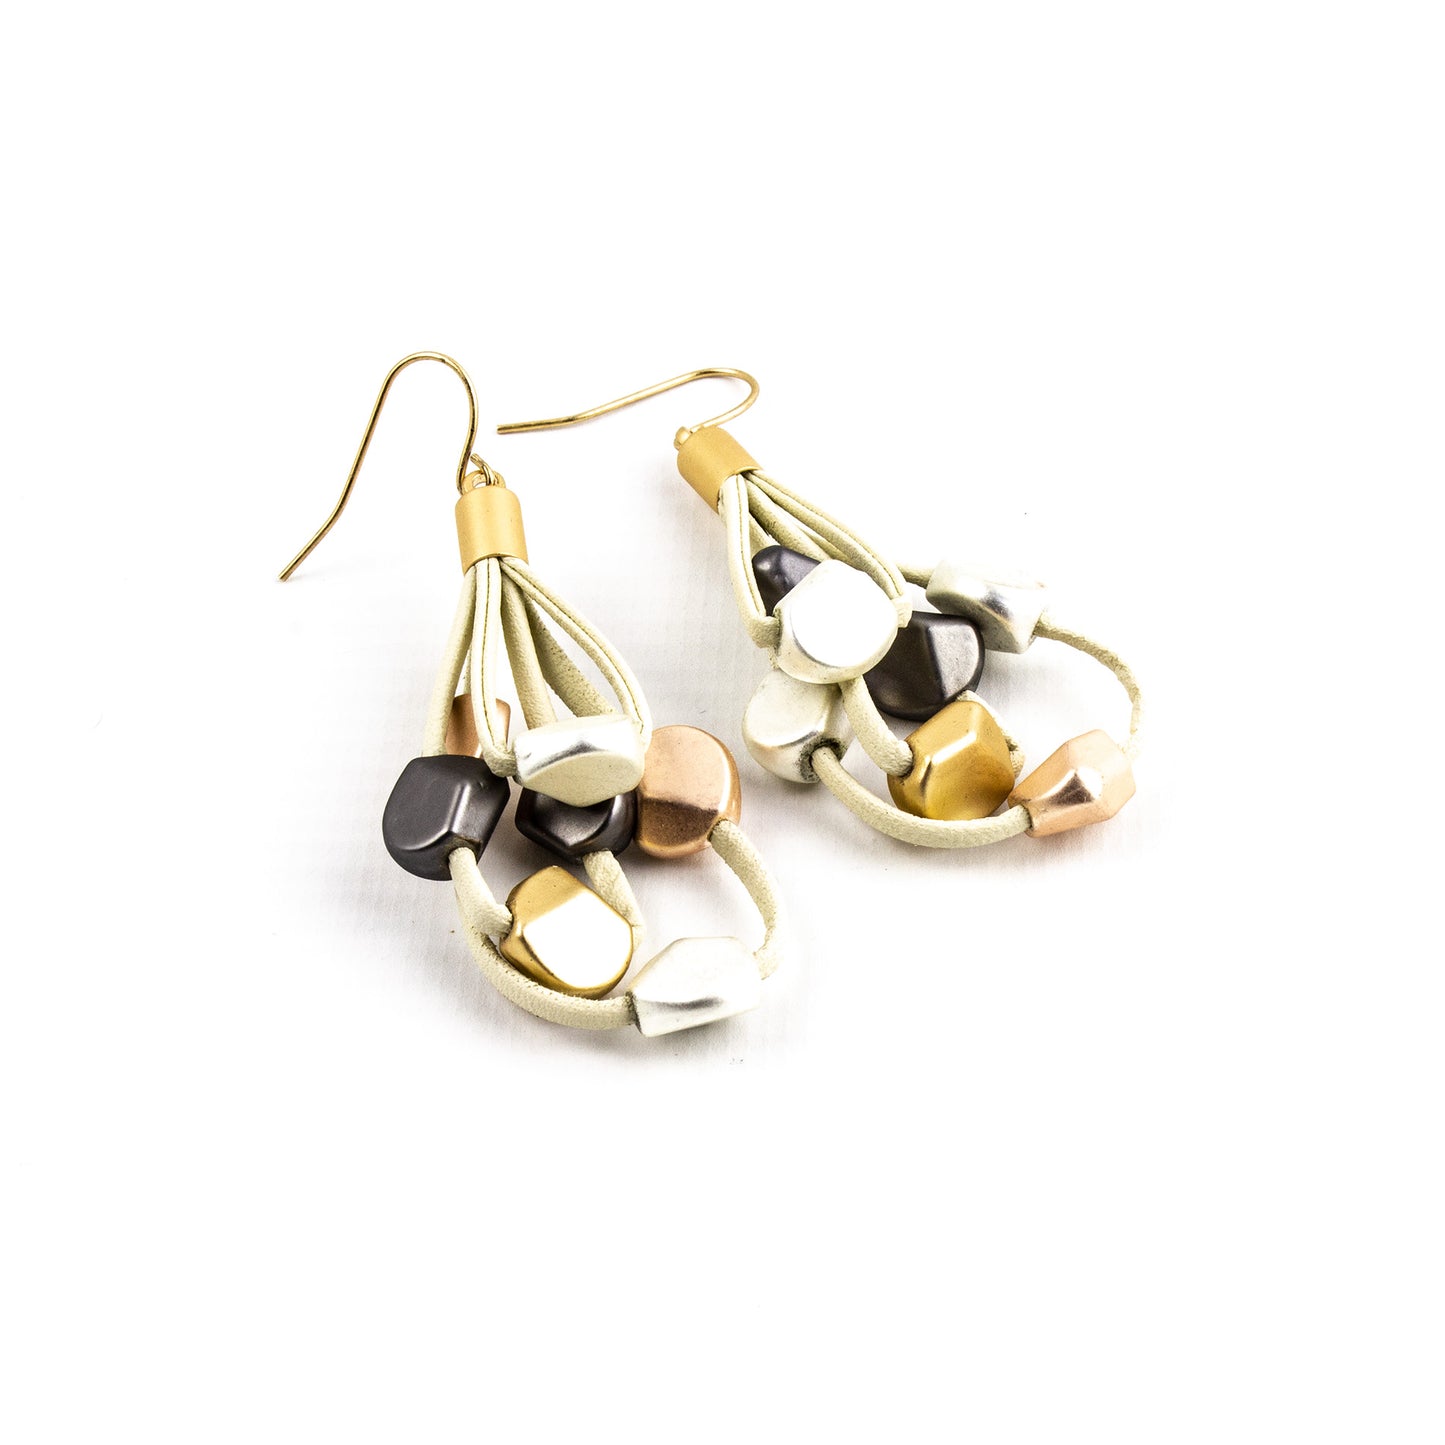 Beril earrings